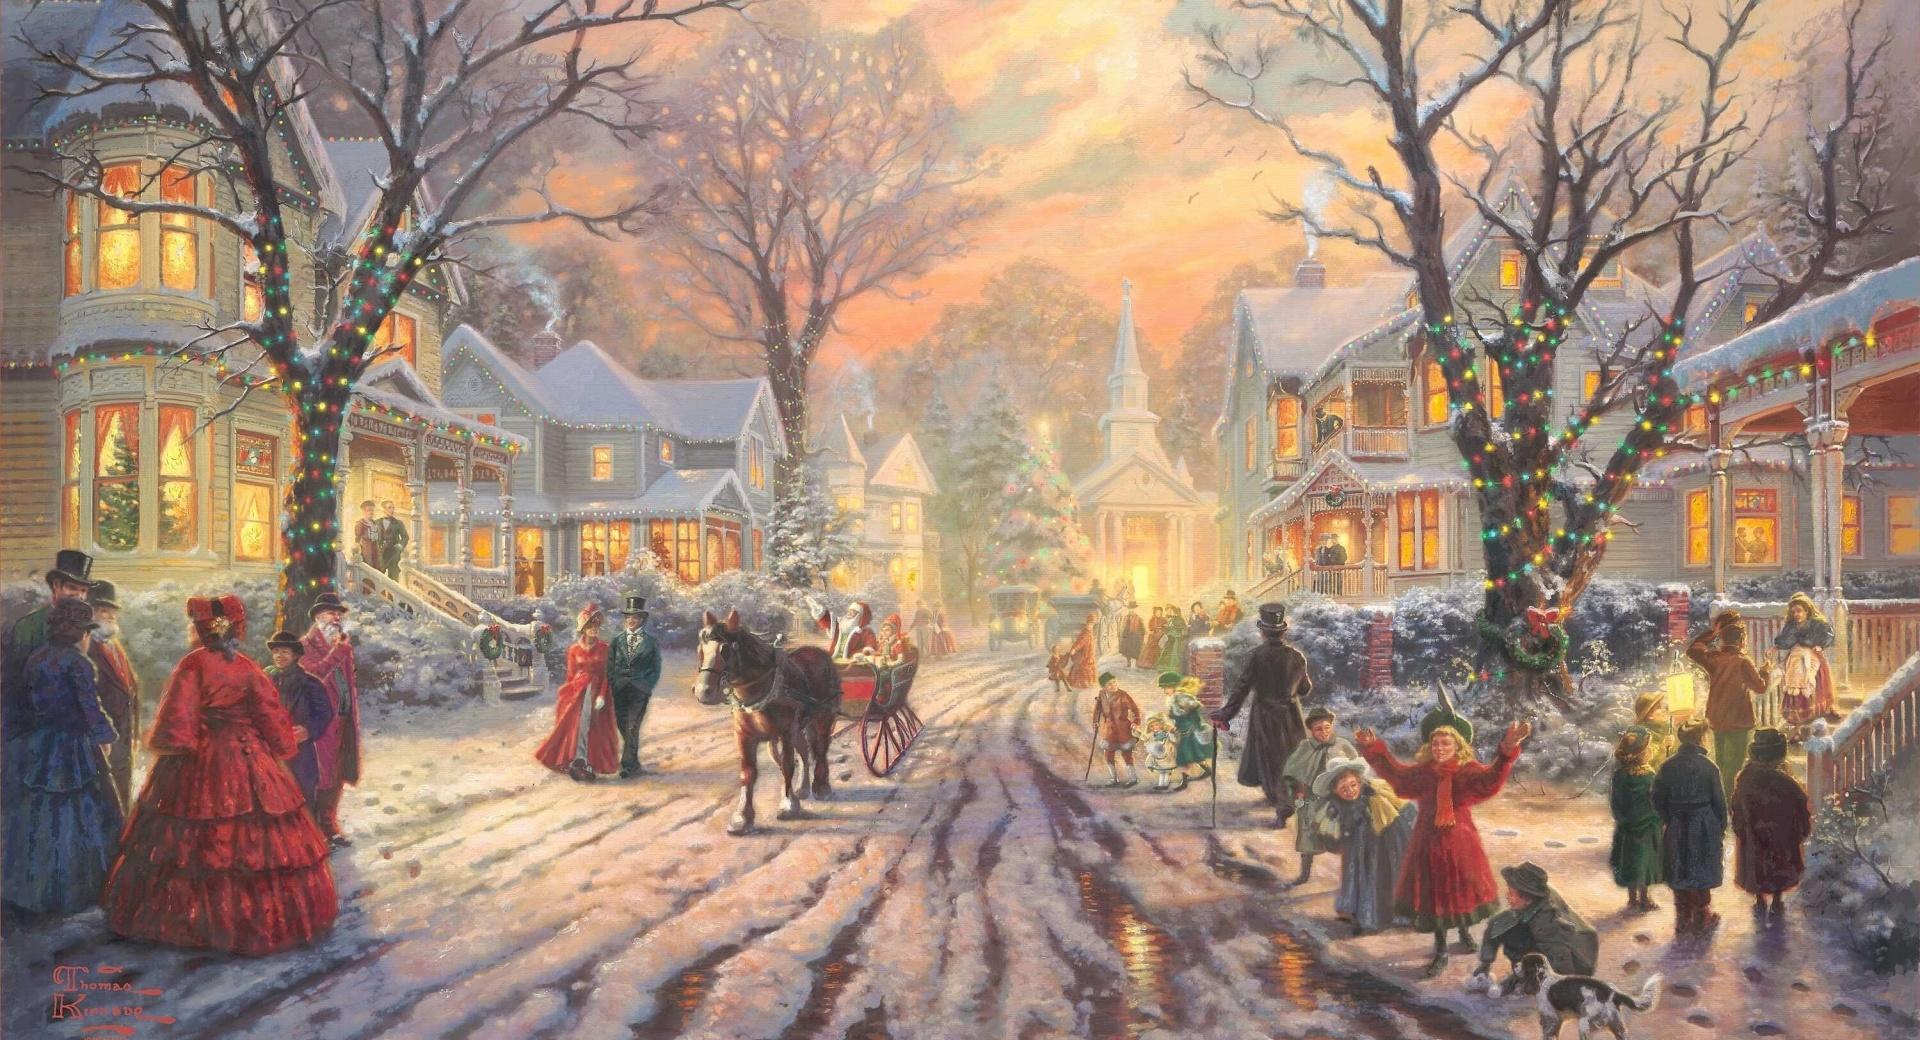 Victorian Christmas Carol by Thomas Kinkade wallpapers HD quality